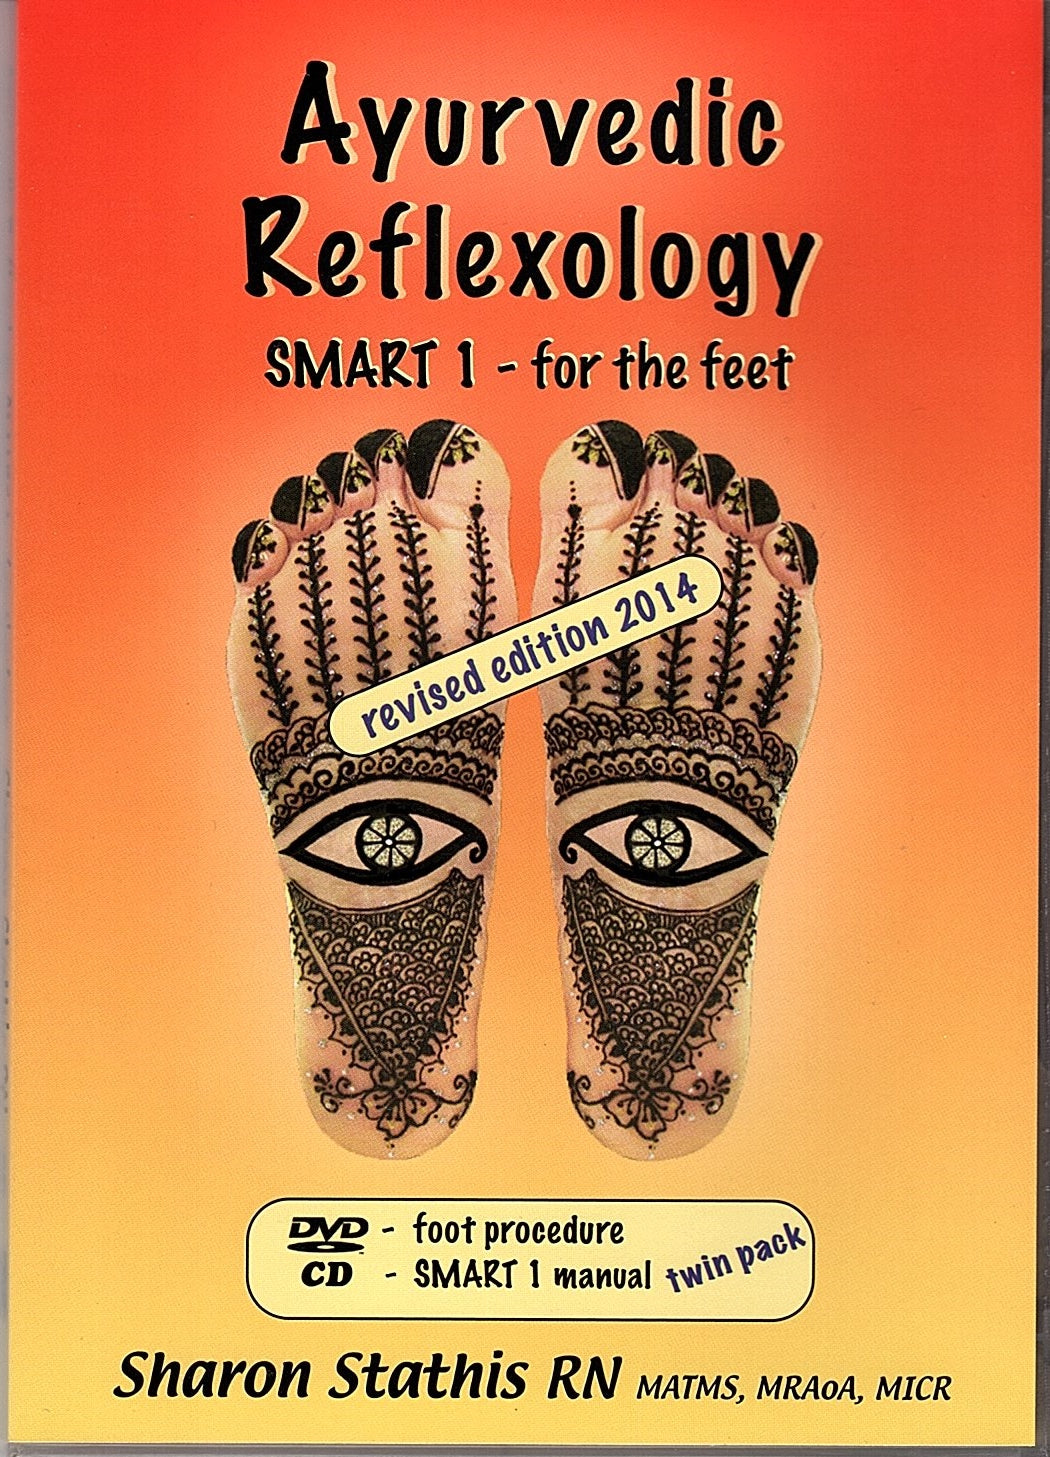 Ayurvedic Reflexology (SMART1) DVD and CD set for feet